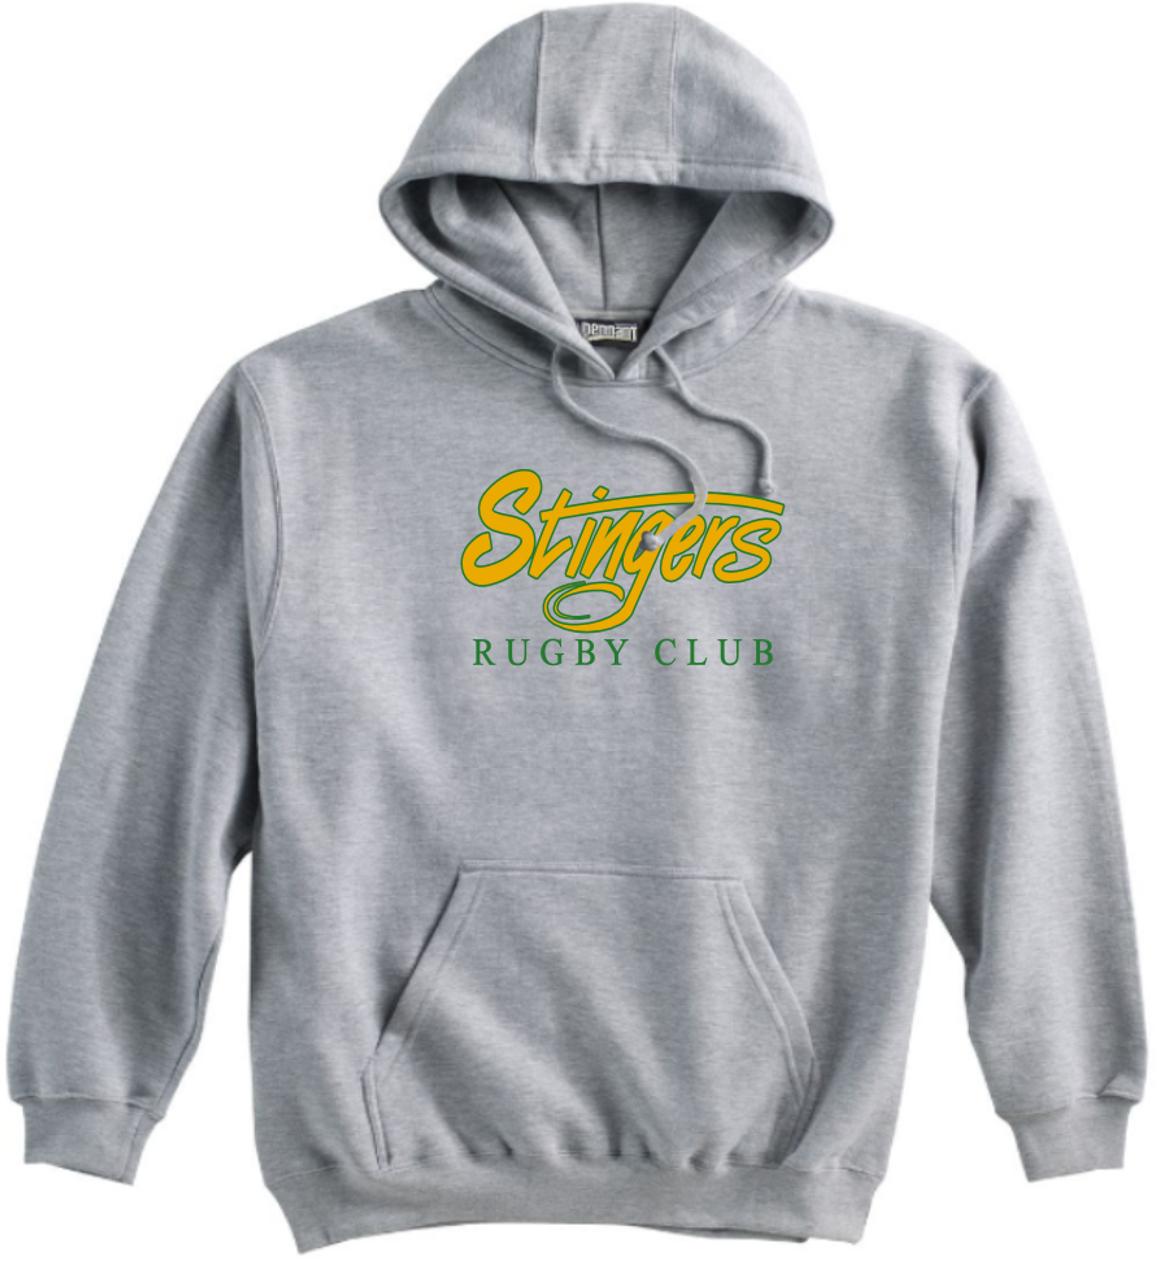 Stingers Rugby Club Hooded Sweatshirt, Gray